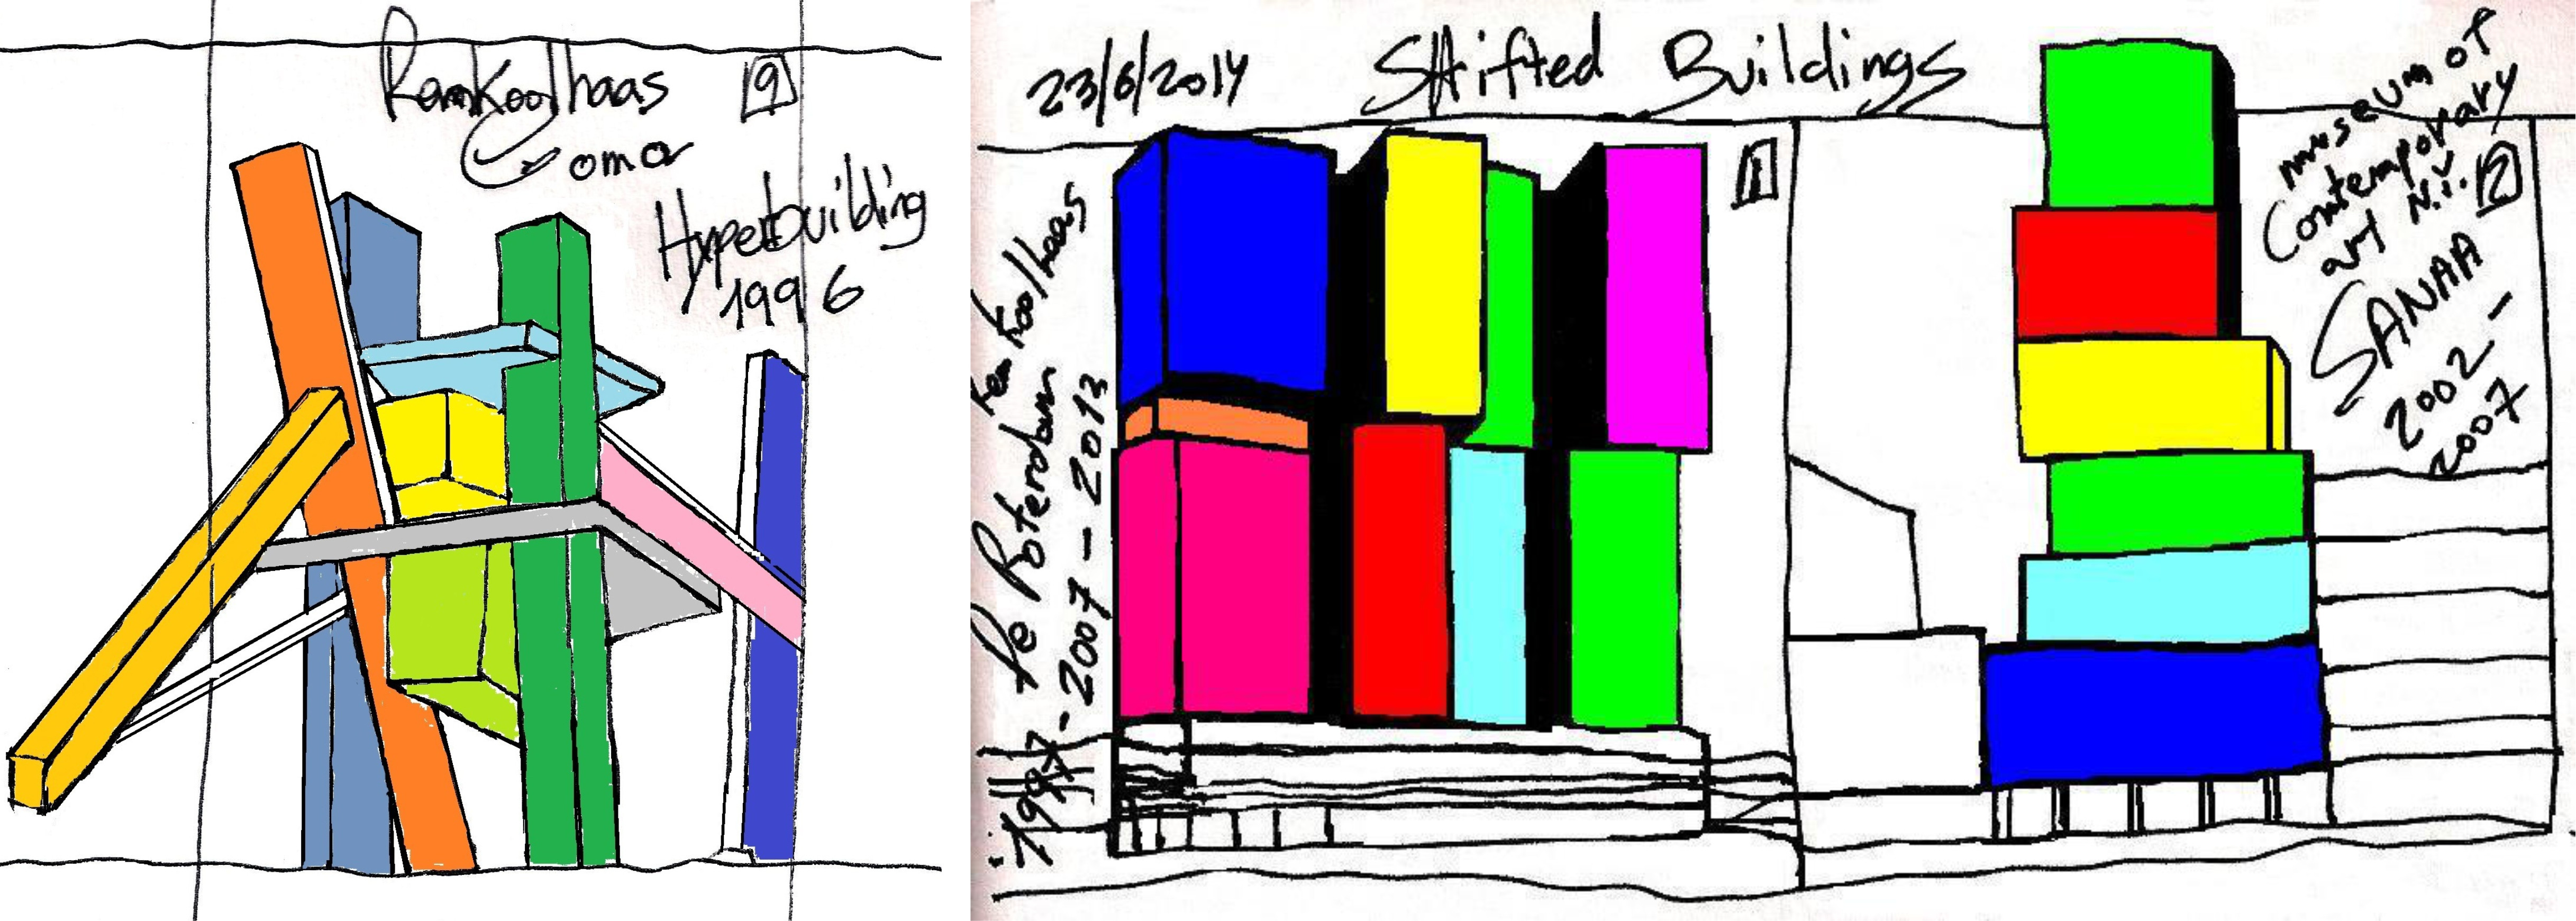 Eliinbar’s Sketchbook 2012-14 ,Rem Koolhaas (The Hyperbuilding) and SANAA Typology of a Shifted Buildings